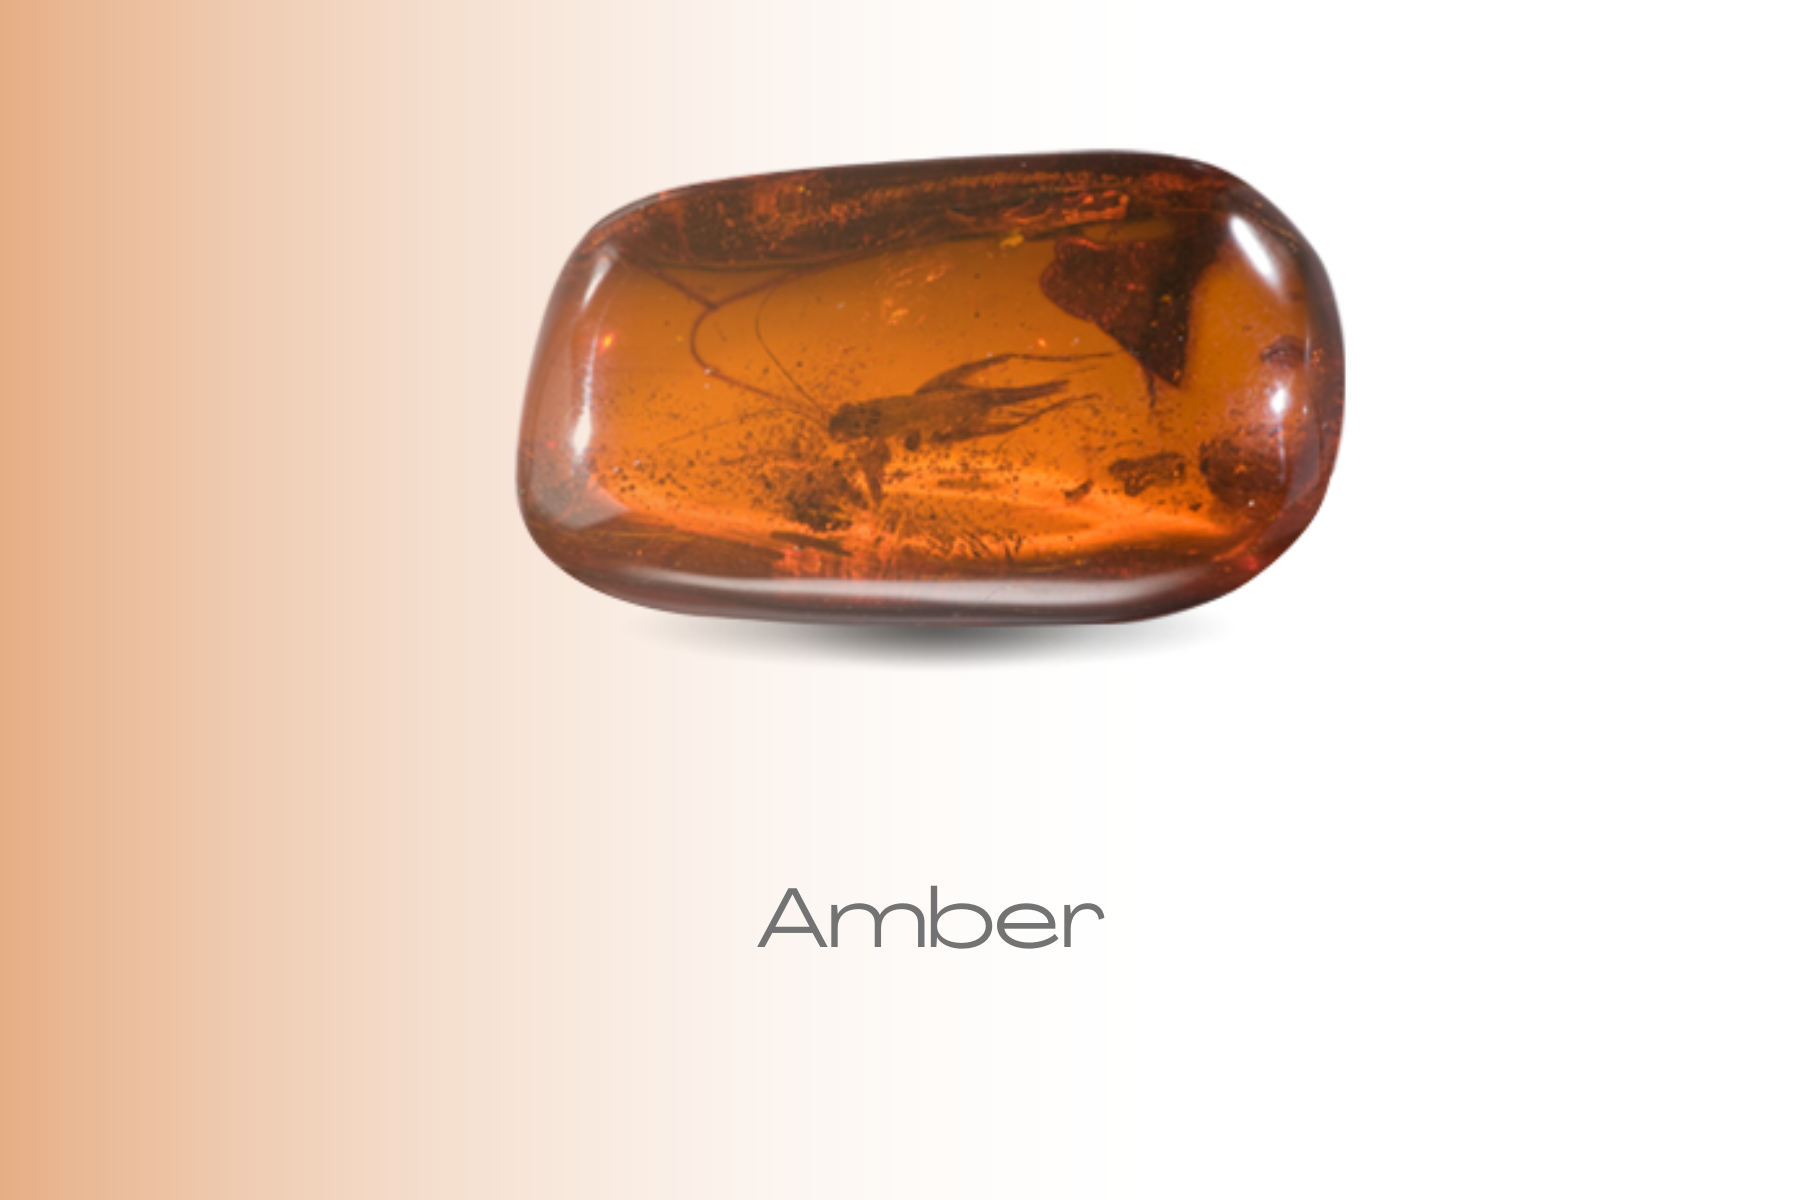 Yellow-dark brown ambert stone with a grasshopper inside